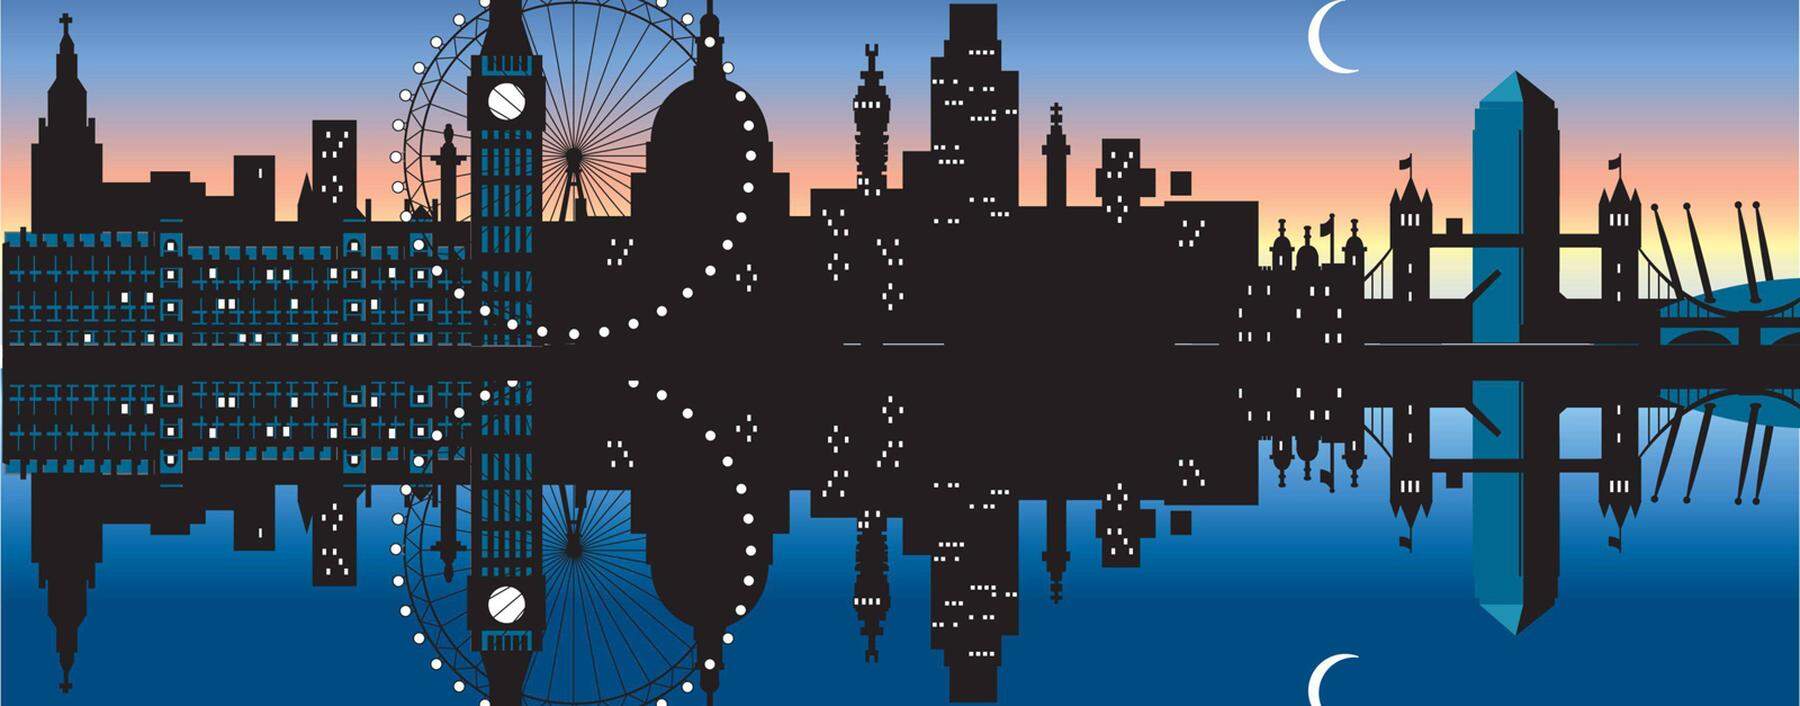 UK London View of waterfront and River Thames at dusk PUBLICATIONxINxGERxSUIxAUTxONLY Copyright x